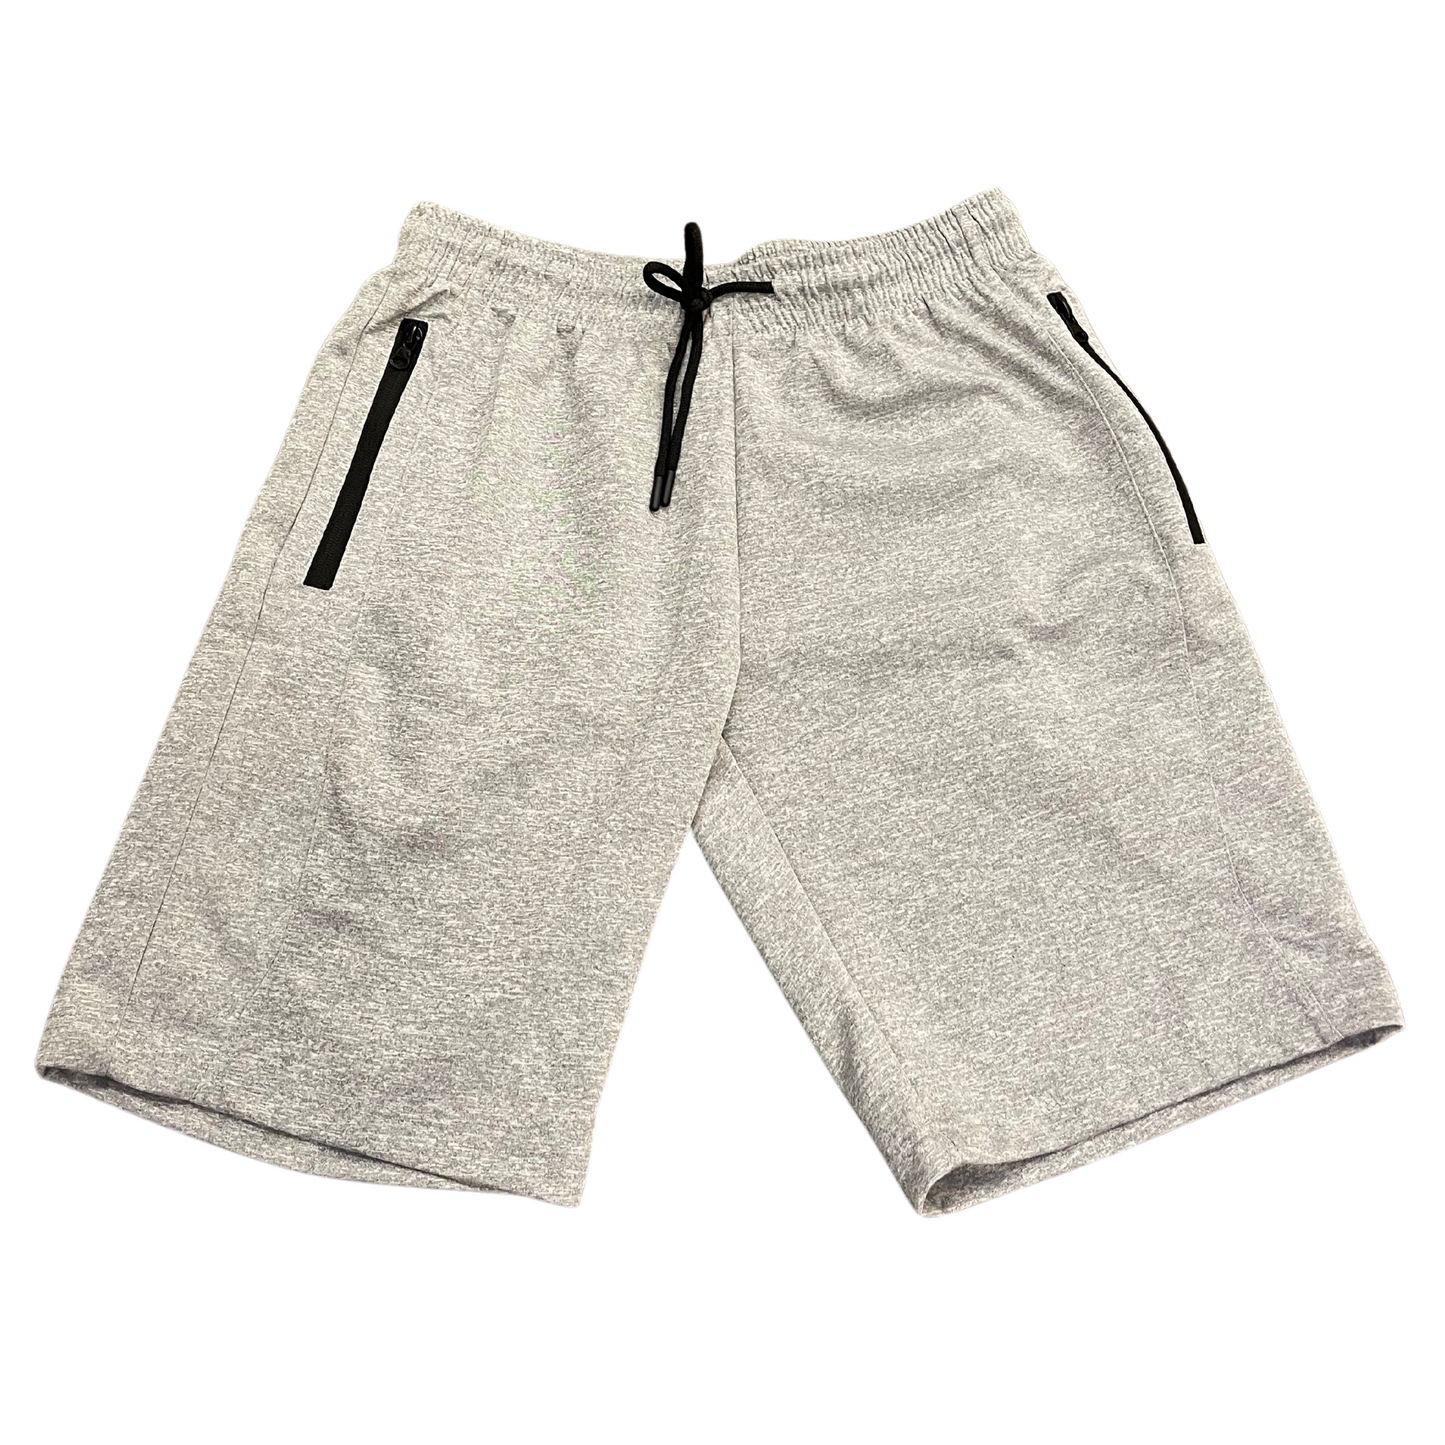 Original Deluxe Gray Shorts (S-XL)